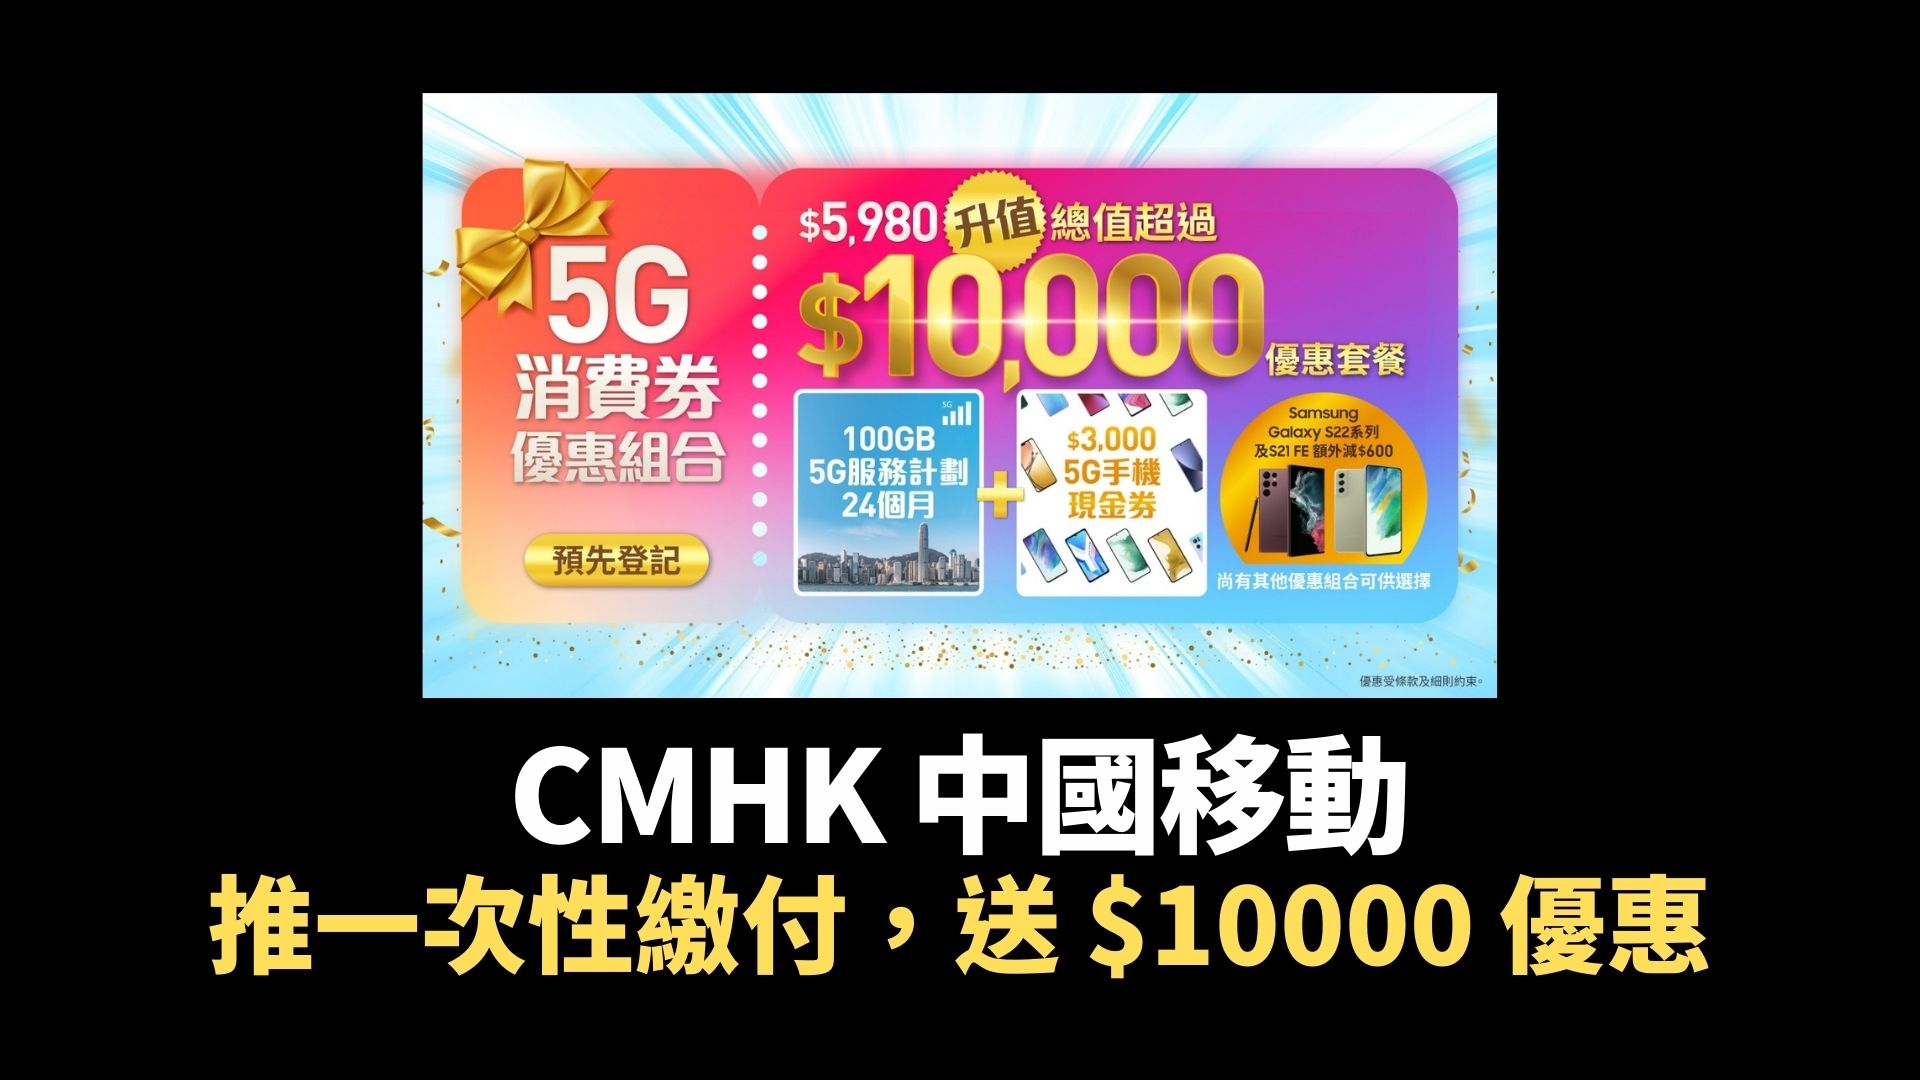 CMHK 推消費劵總值 $10000 優惠